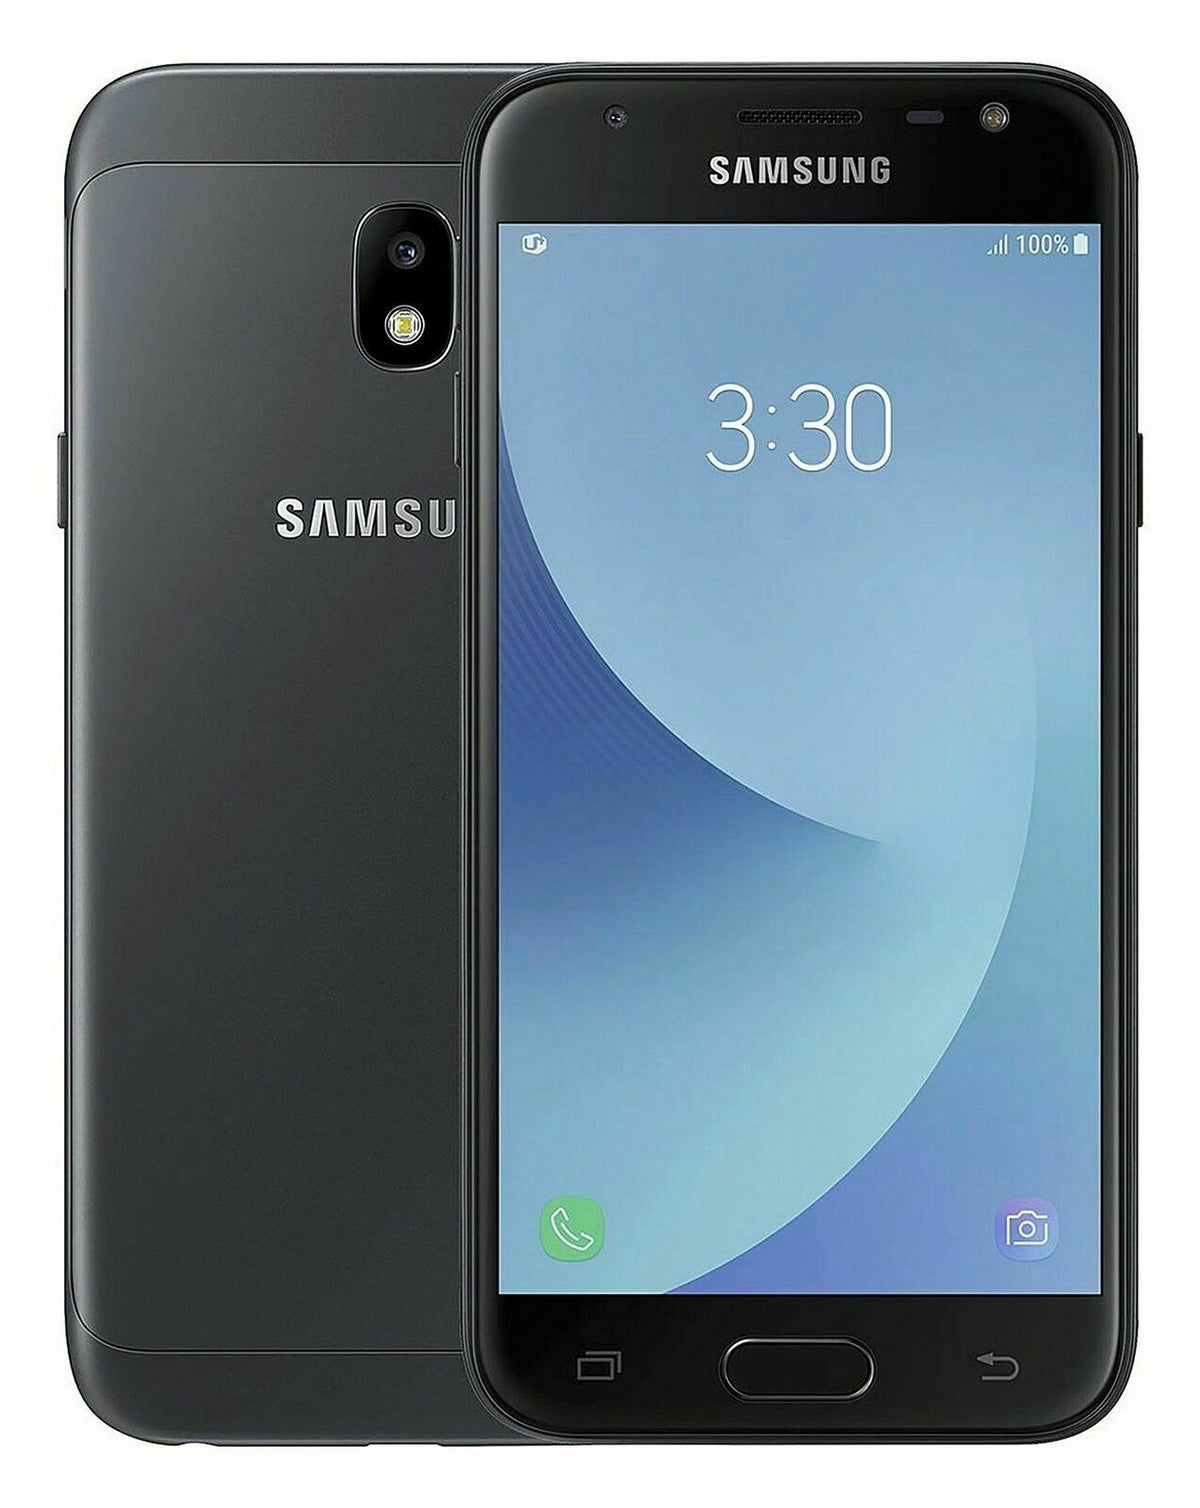 Samsung Galaxy J3 Pro (J330G / 2017) - Very Good Condition